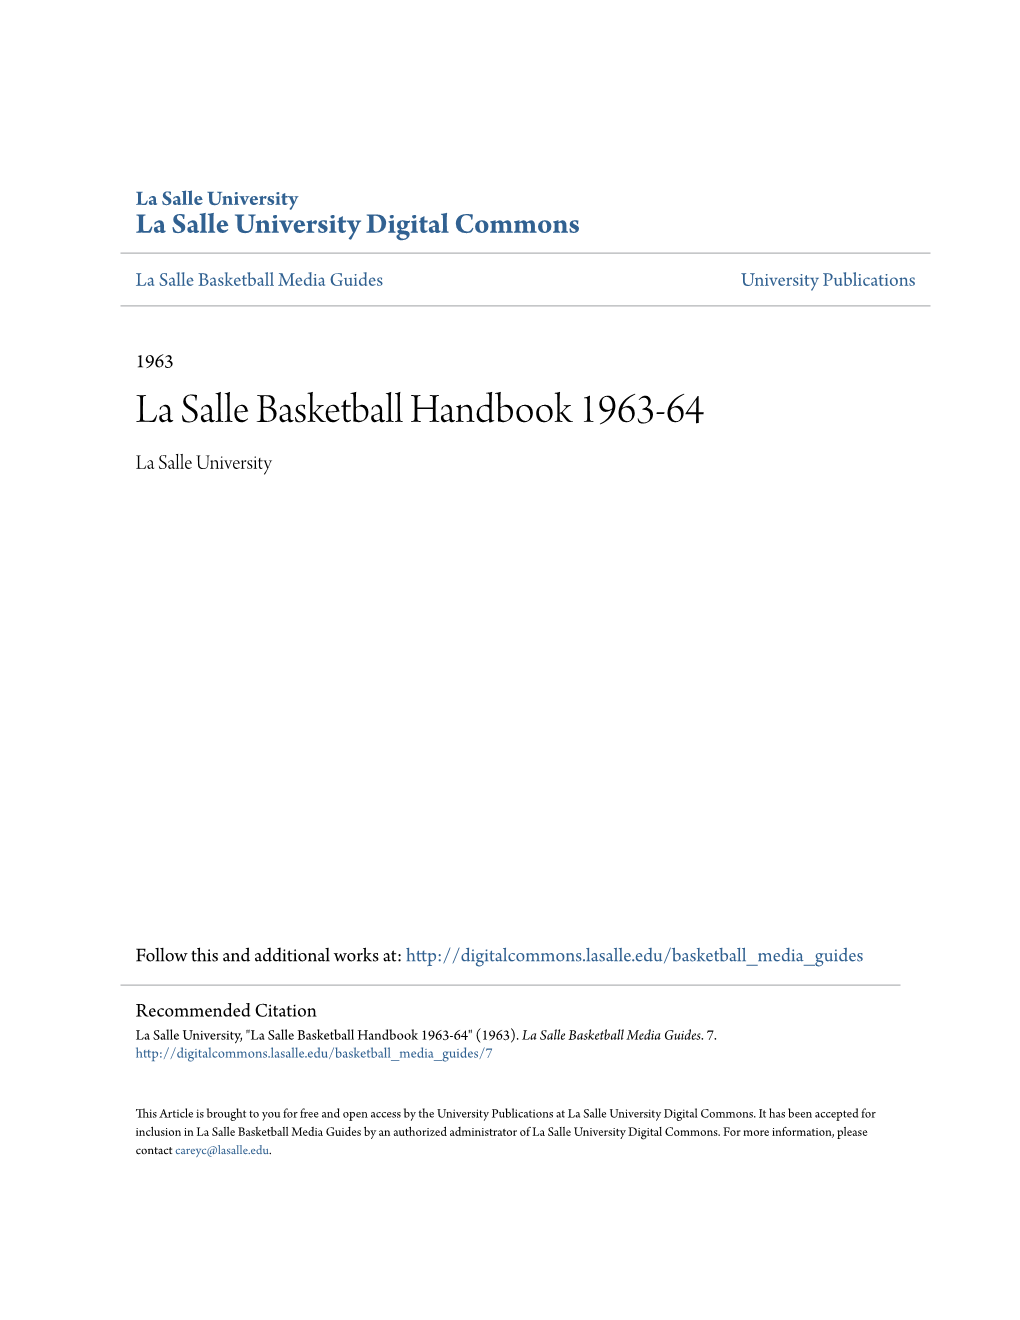 La Salle Basketball Handbook 1963-64 La Salle University